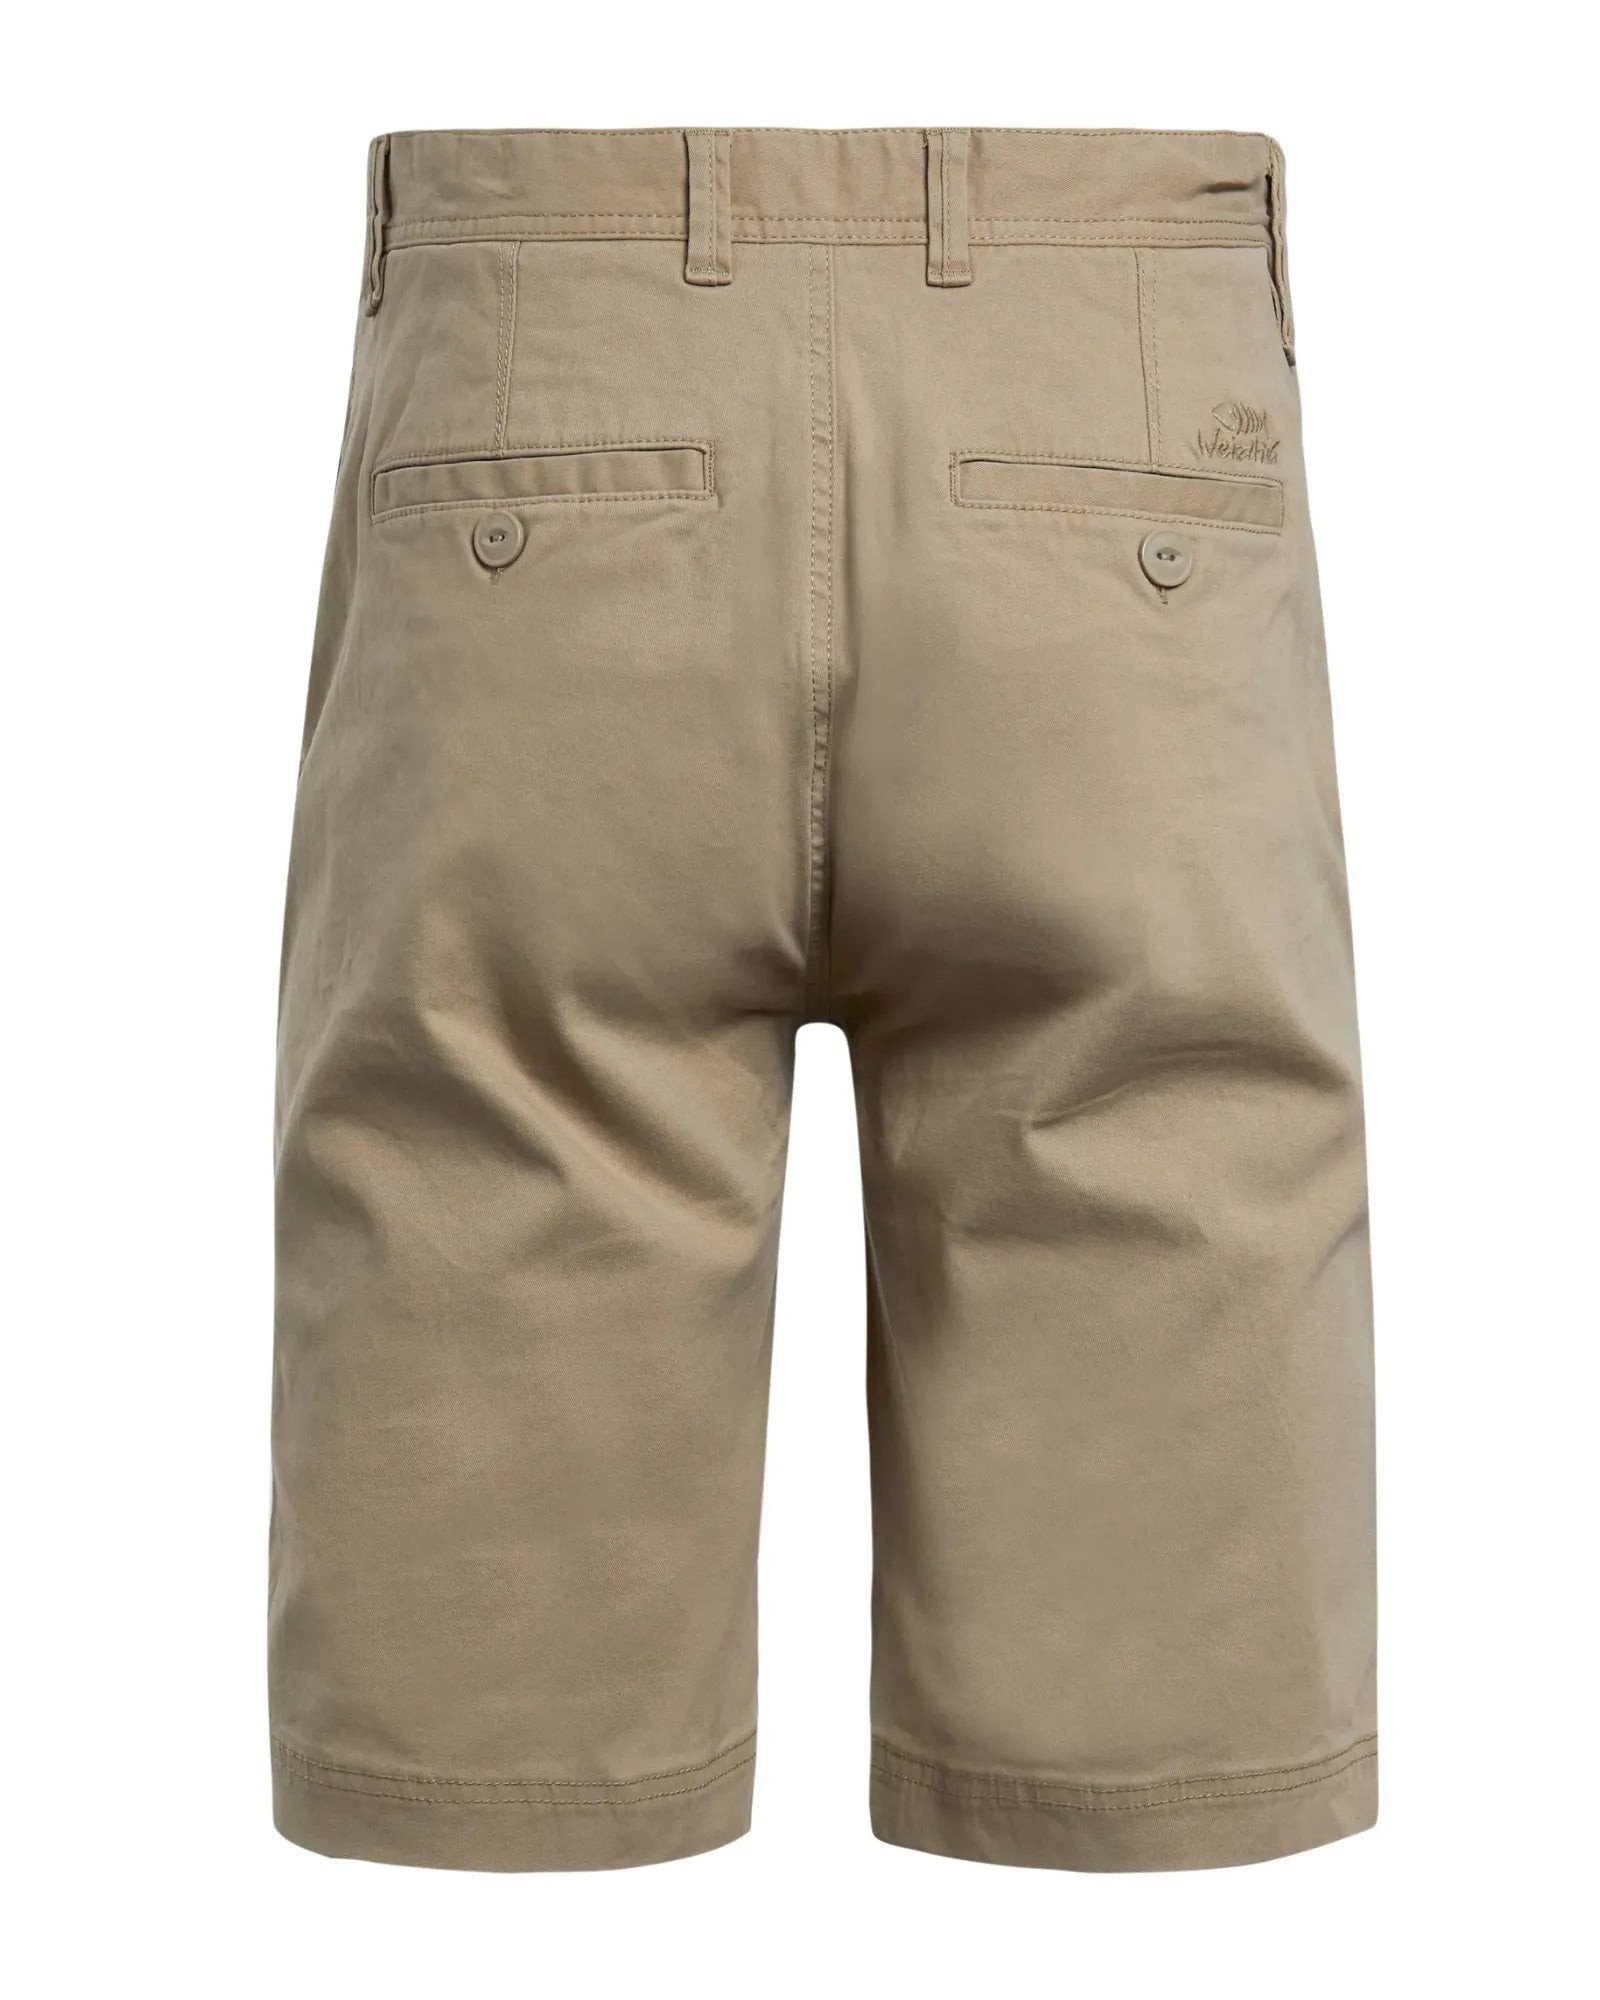 Rayburn Organic Cotton Flat Front Shorts - Taupe Grey